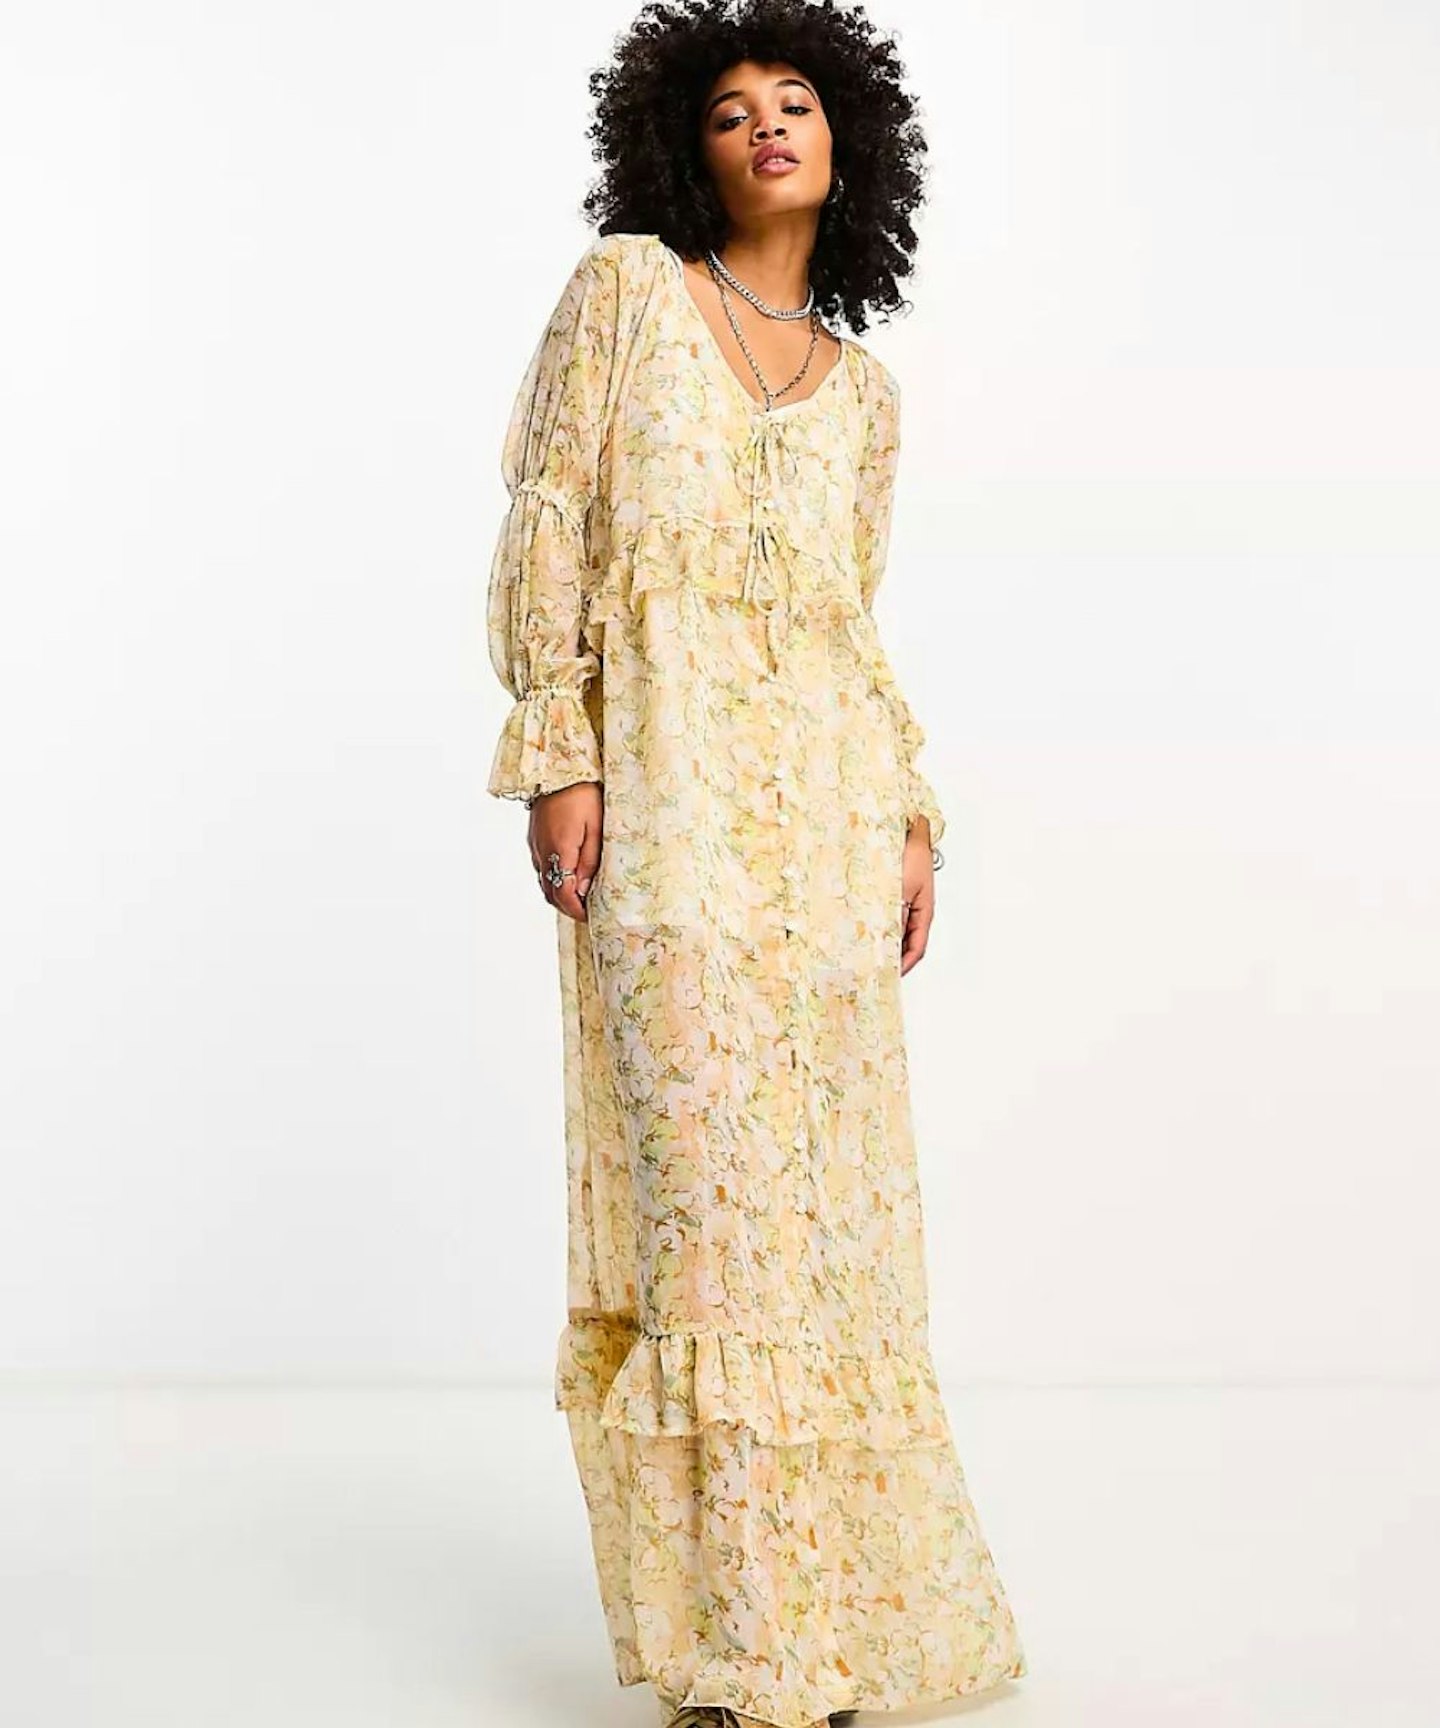 Reclaimed Vintage floaty long sleeve dress in pretty floral print